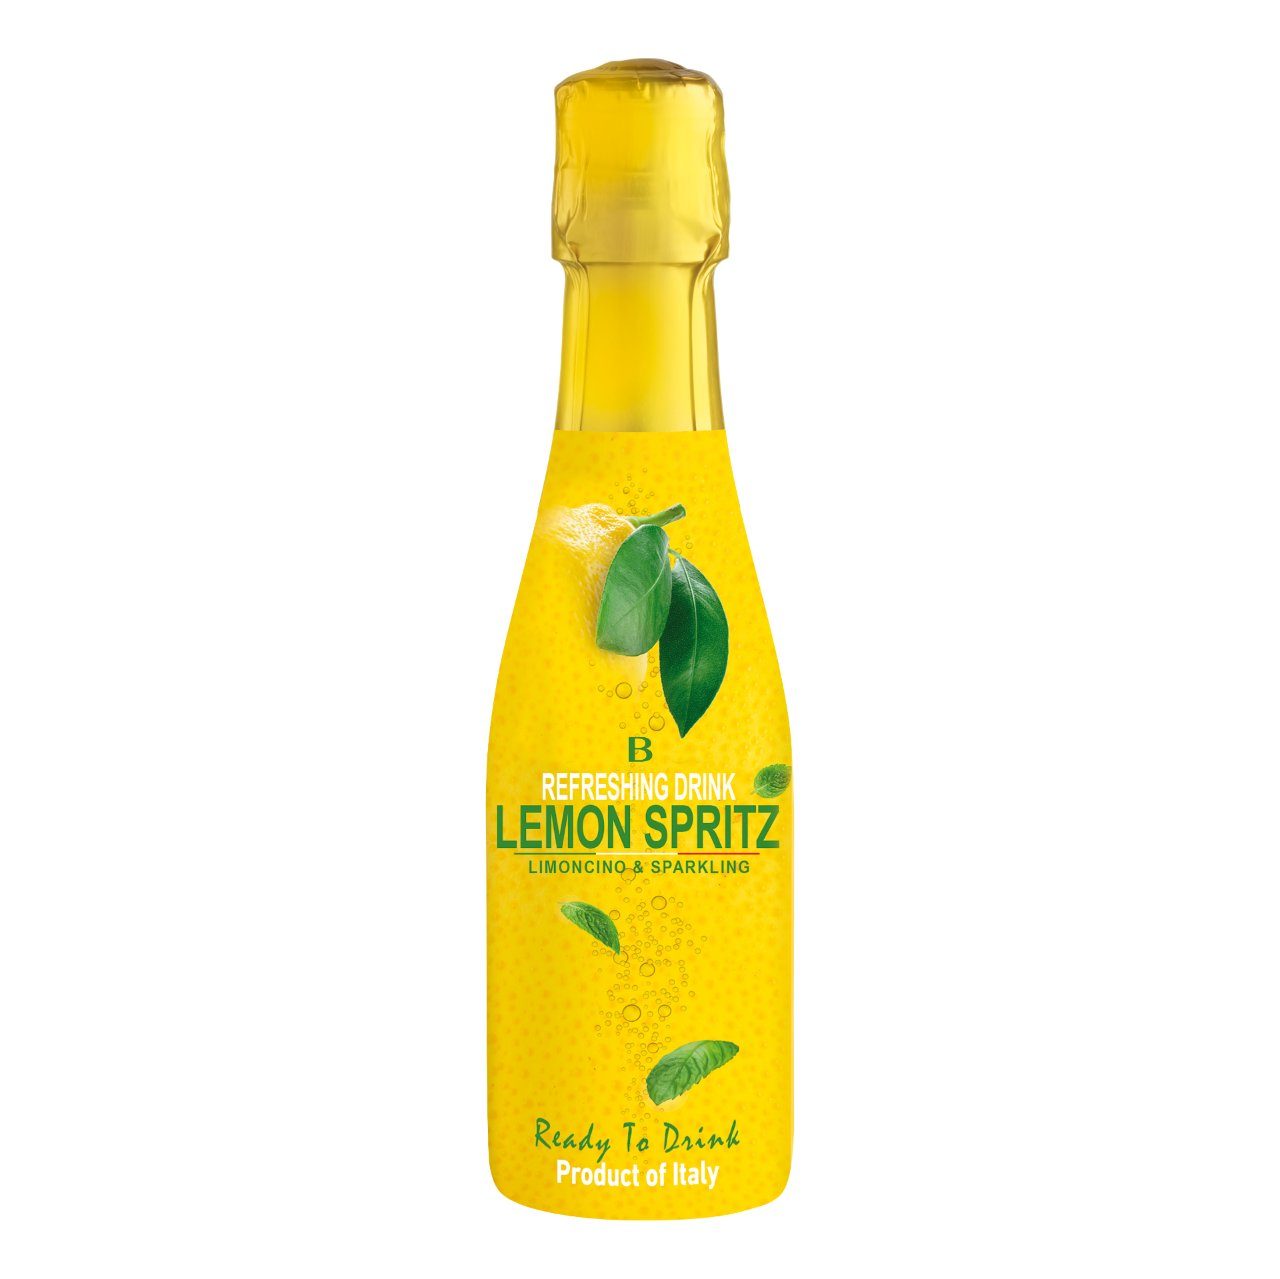 Lemon Spritz